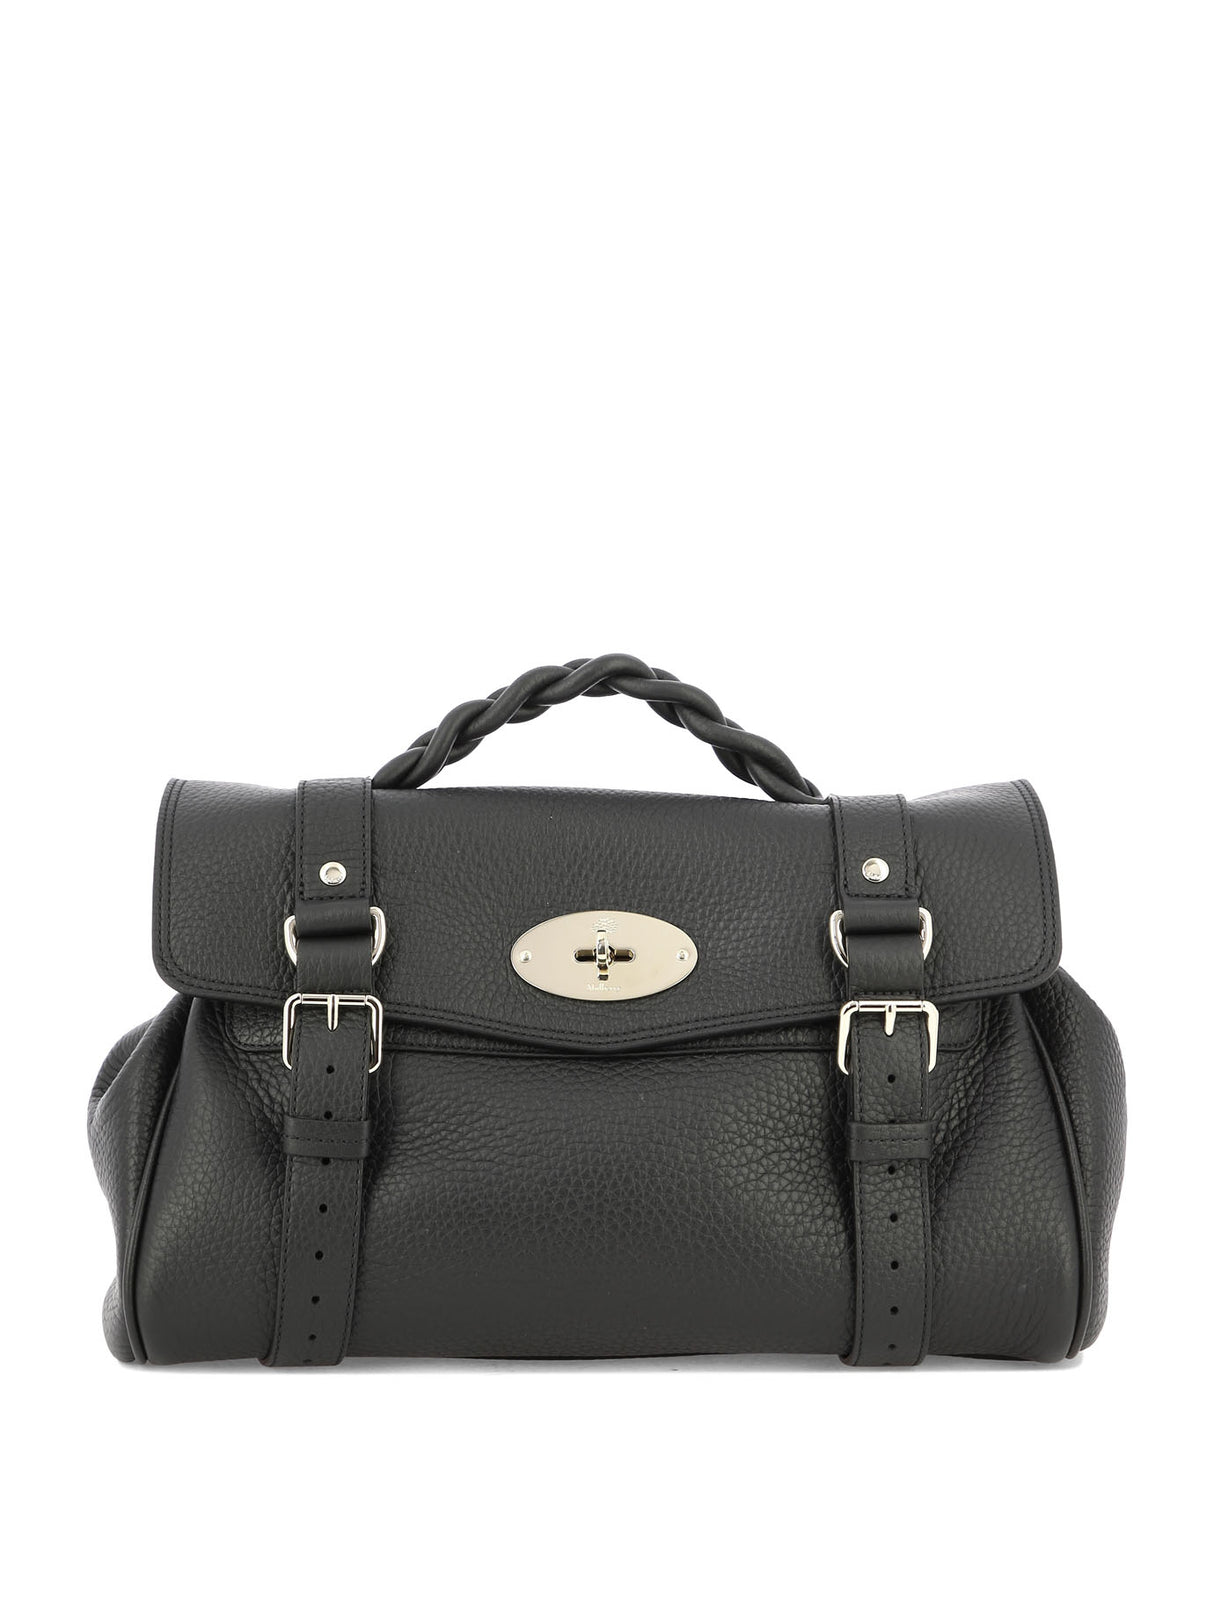 MULBERRY Elegant Black Shoulder Handbag - Adjustable Strap, Postman's Lock Closure, Braided Handle